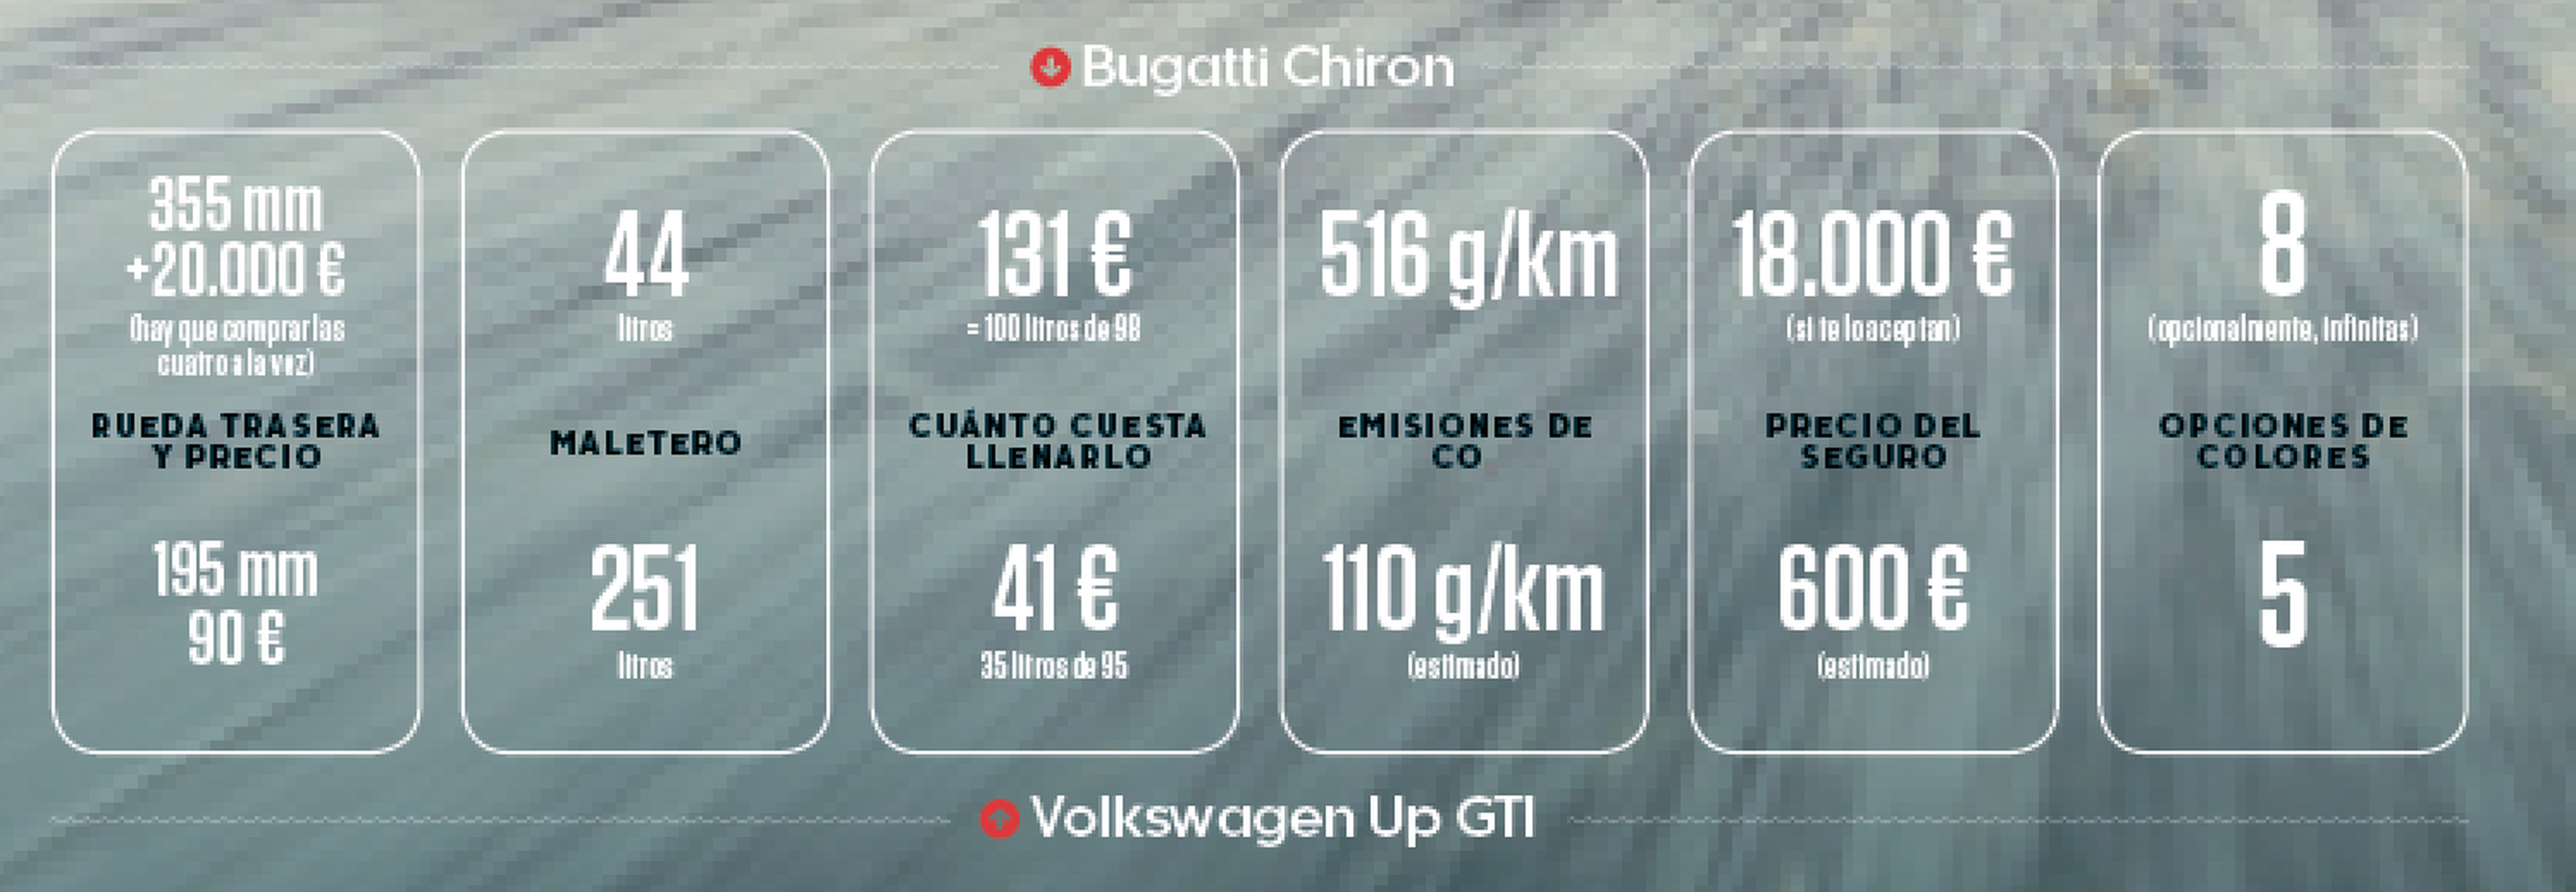 Volkswagen up! GTI vs Bugatti Chiron (cifras)